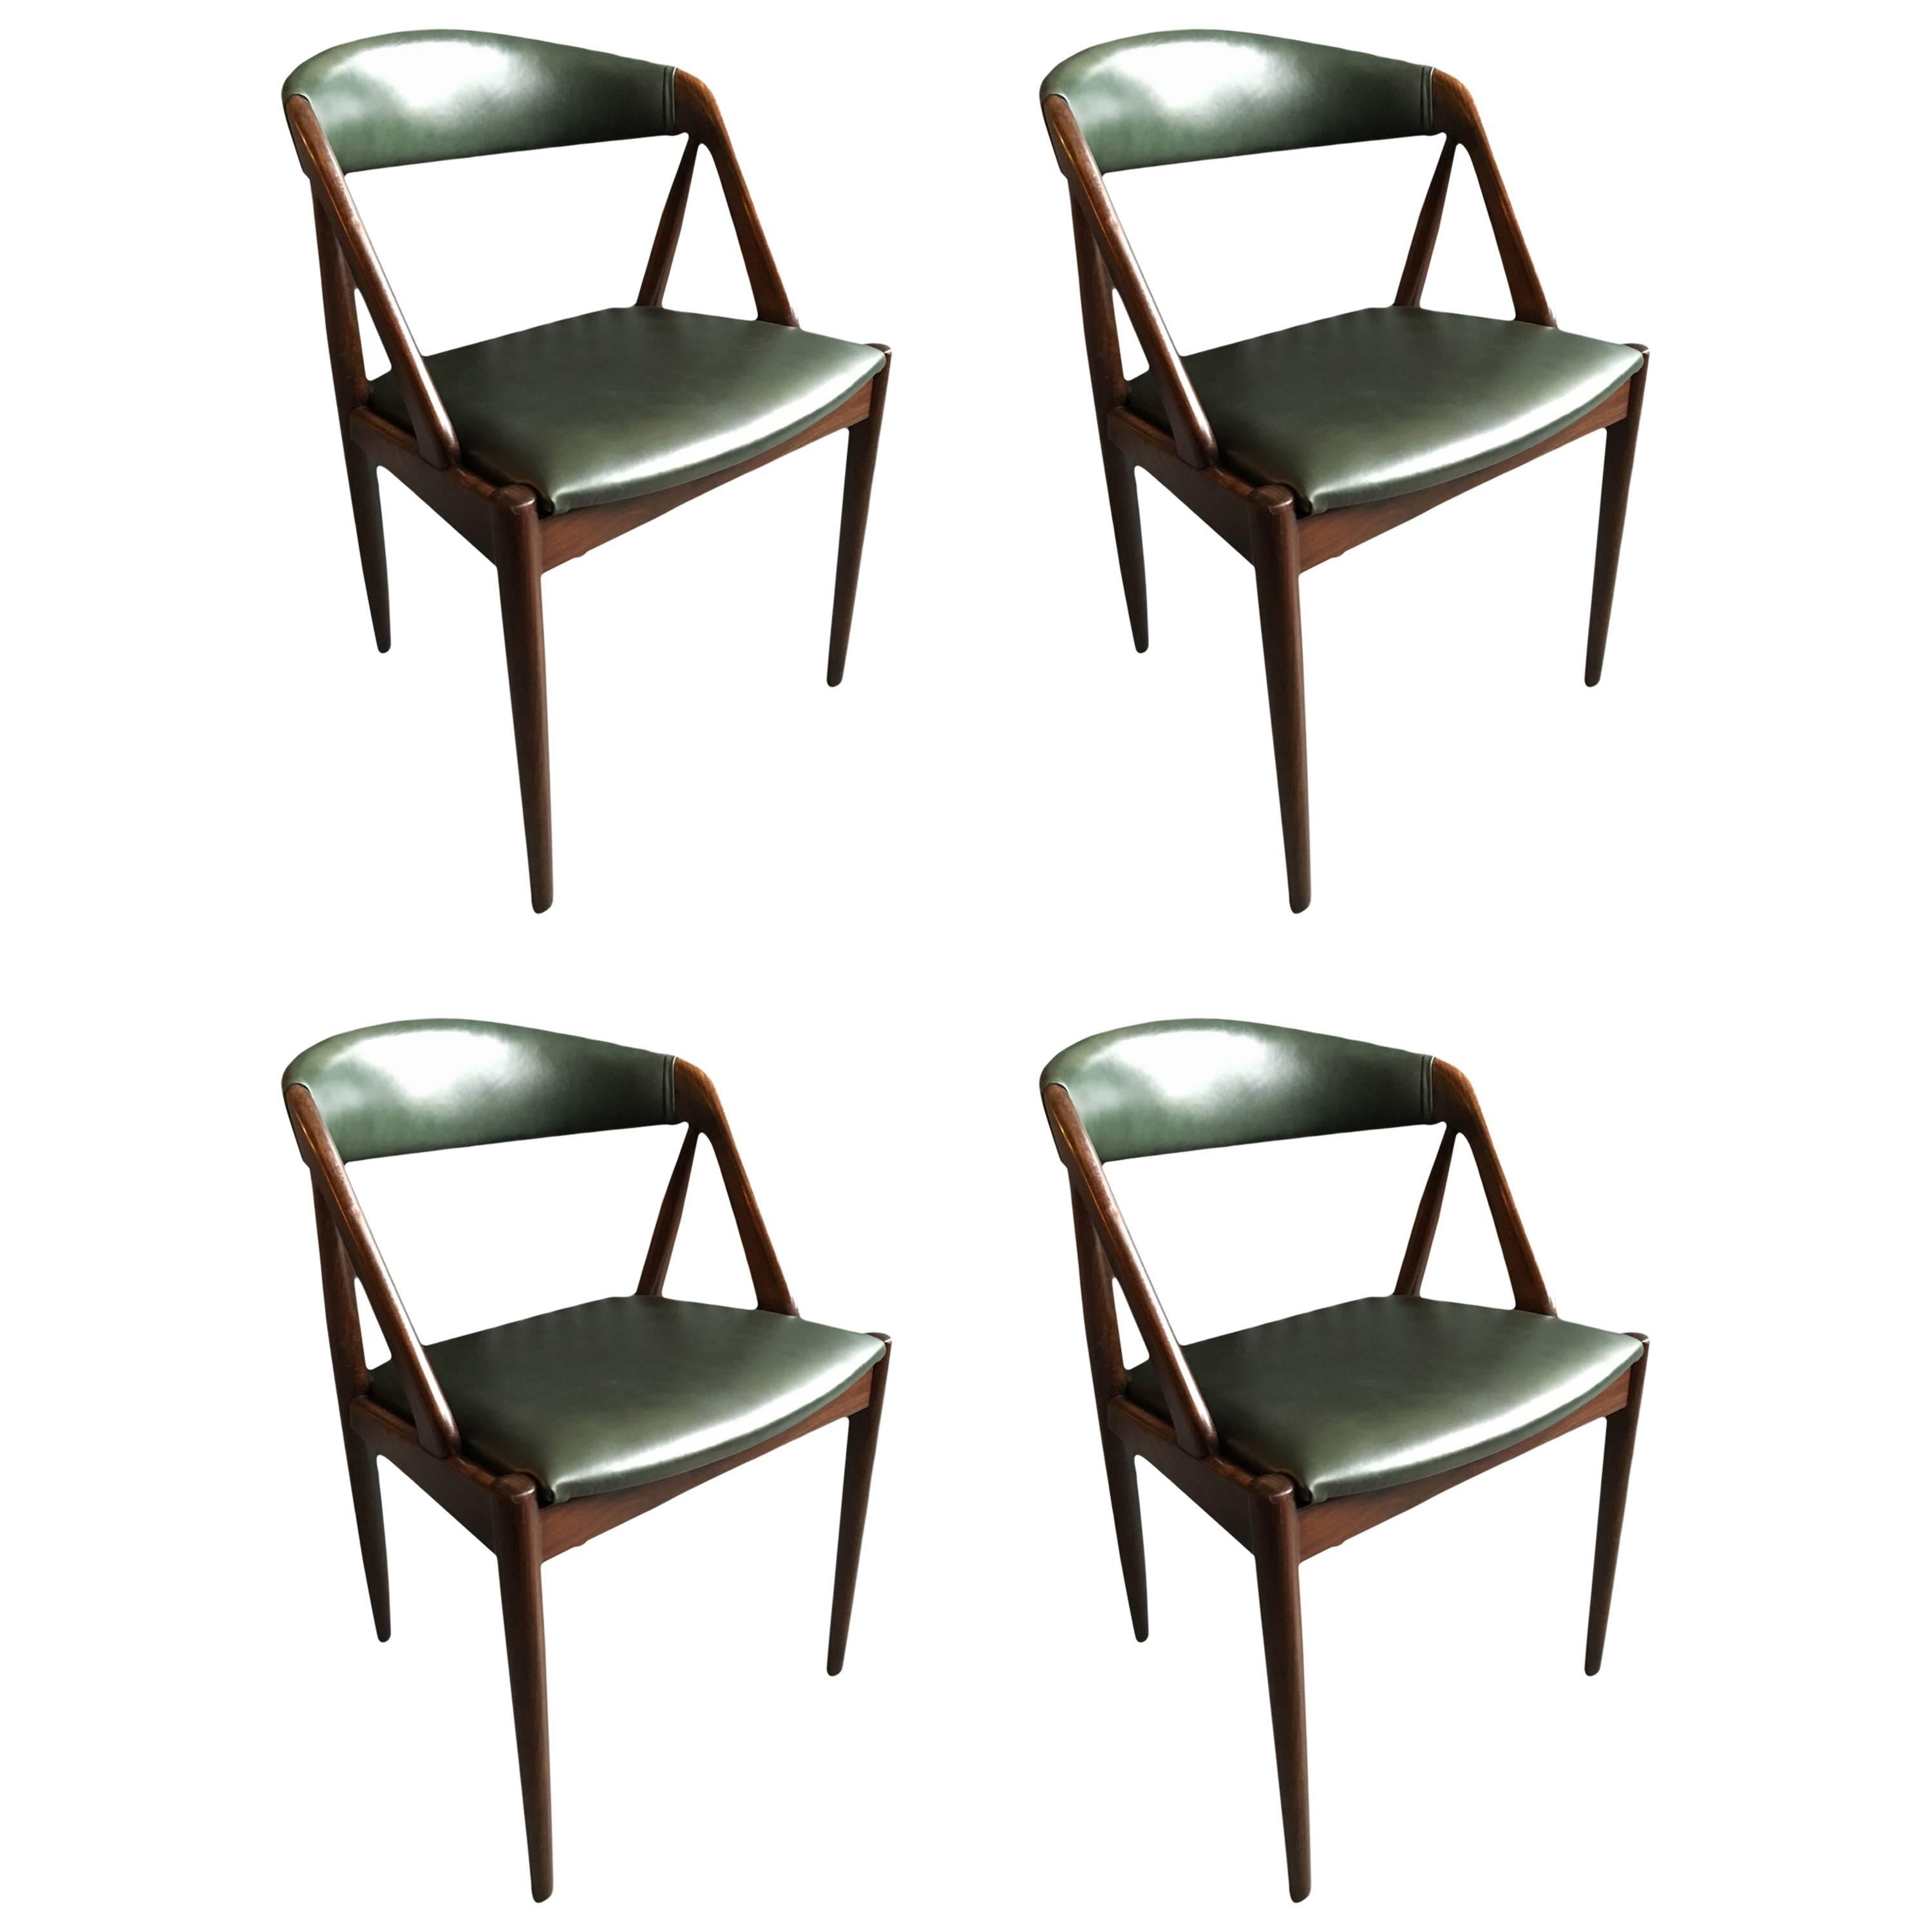 Kai Kristiansen Dining Chairs, model 31, restored set of 4.